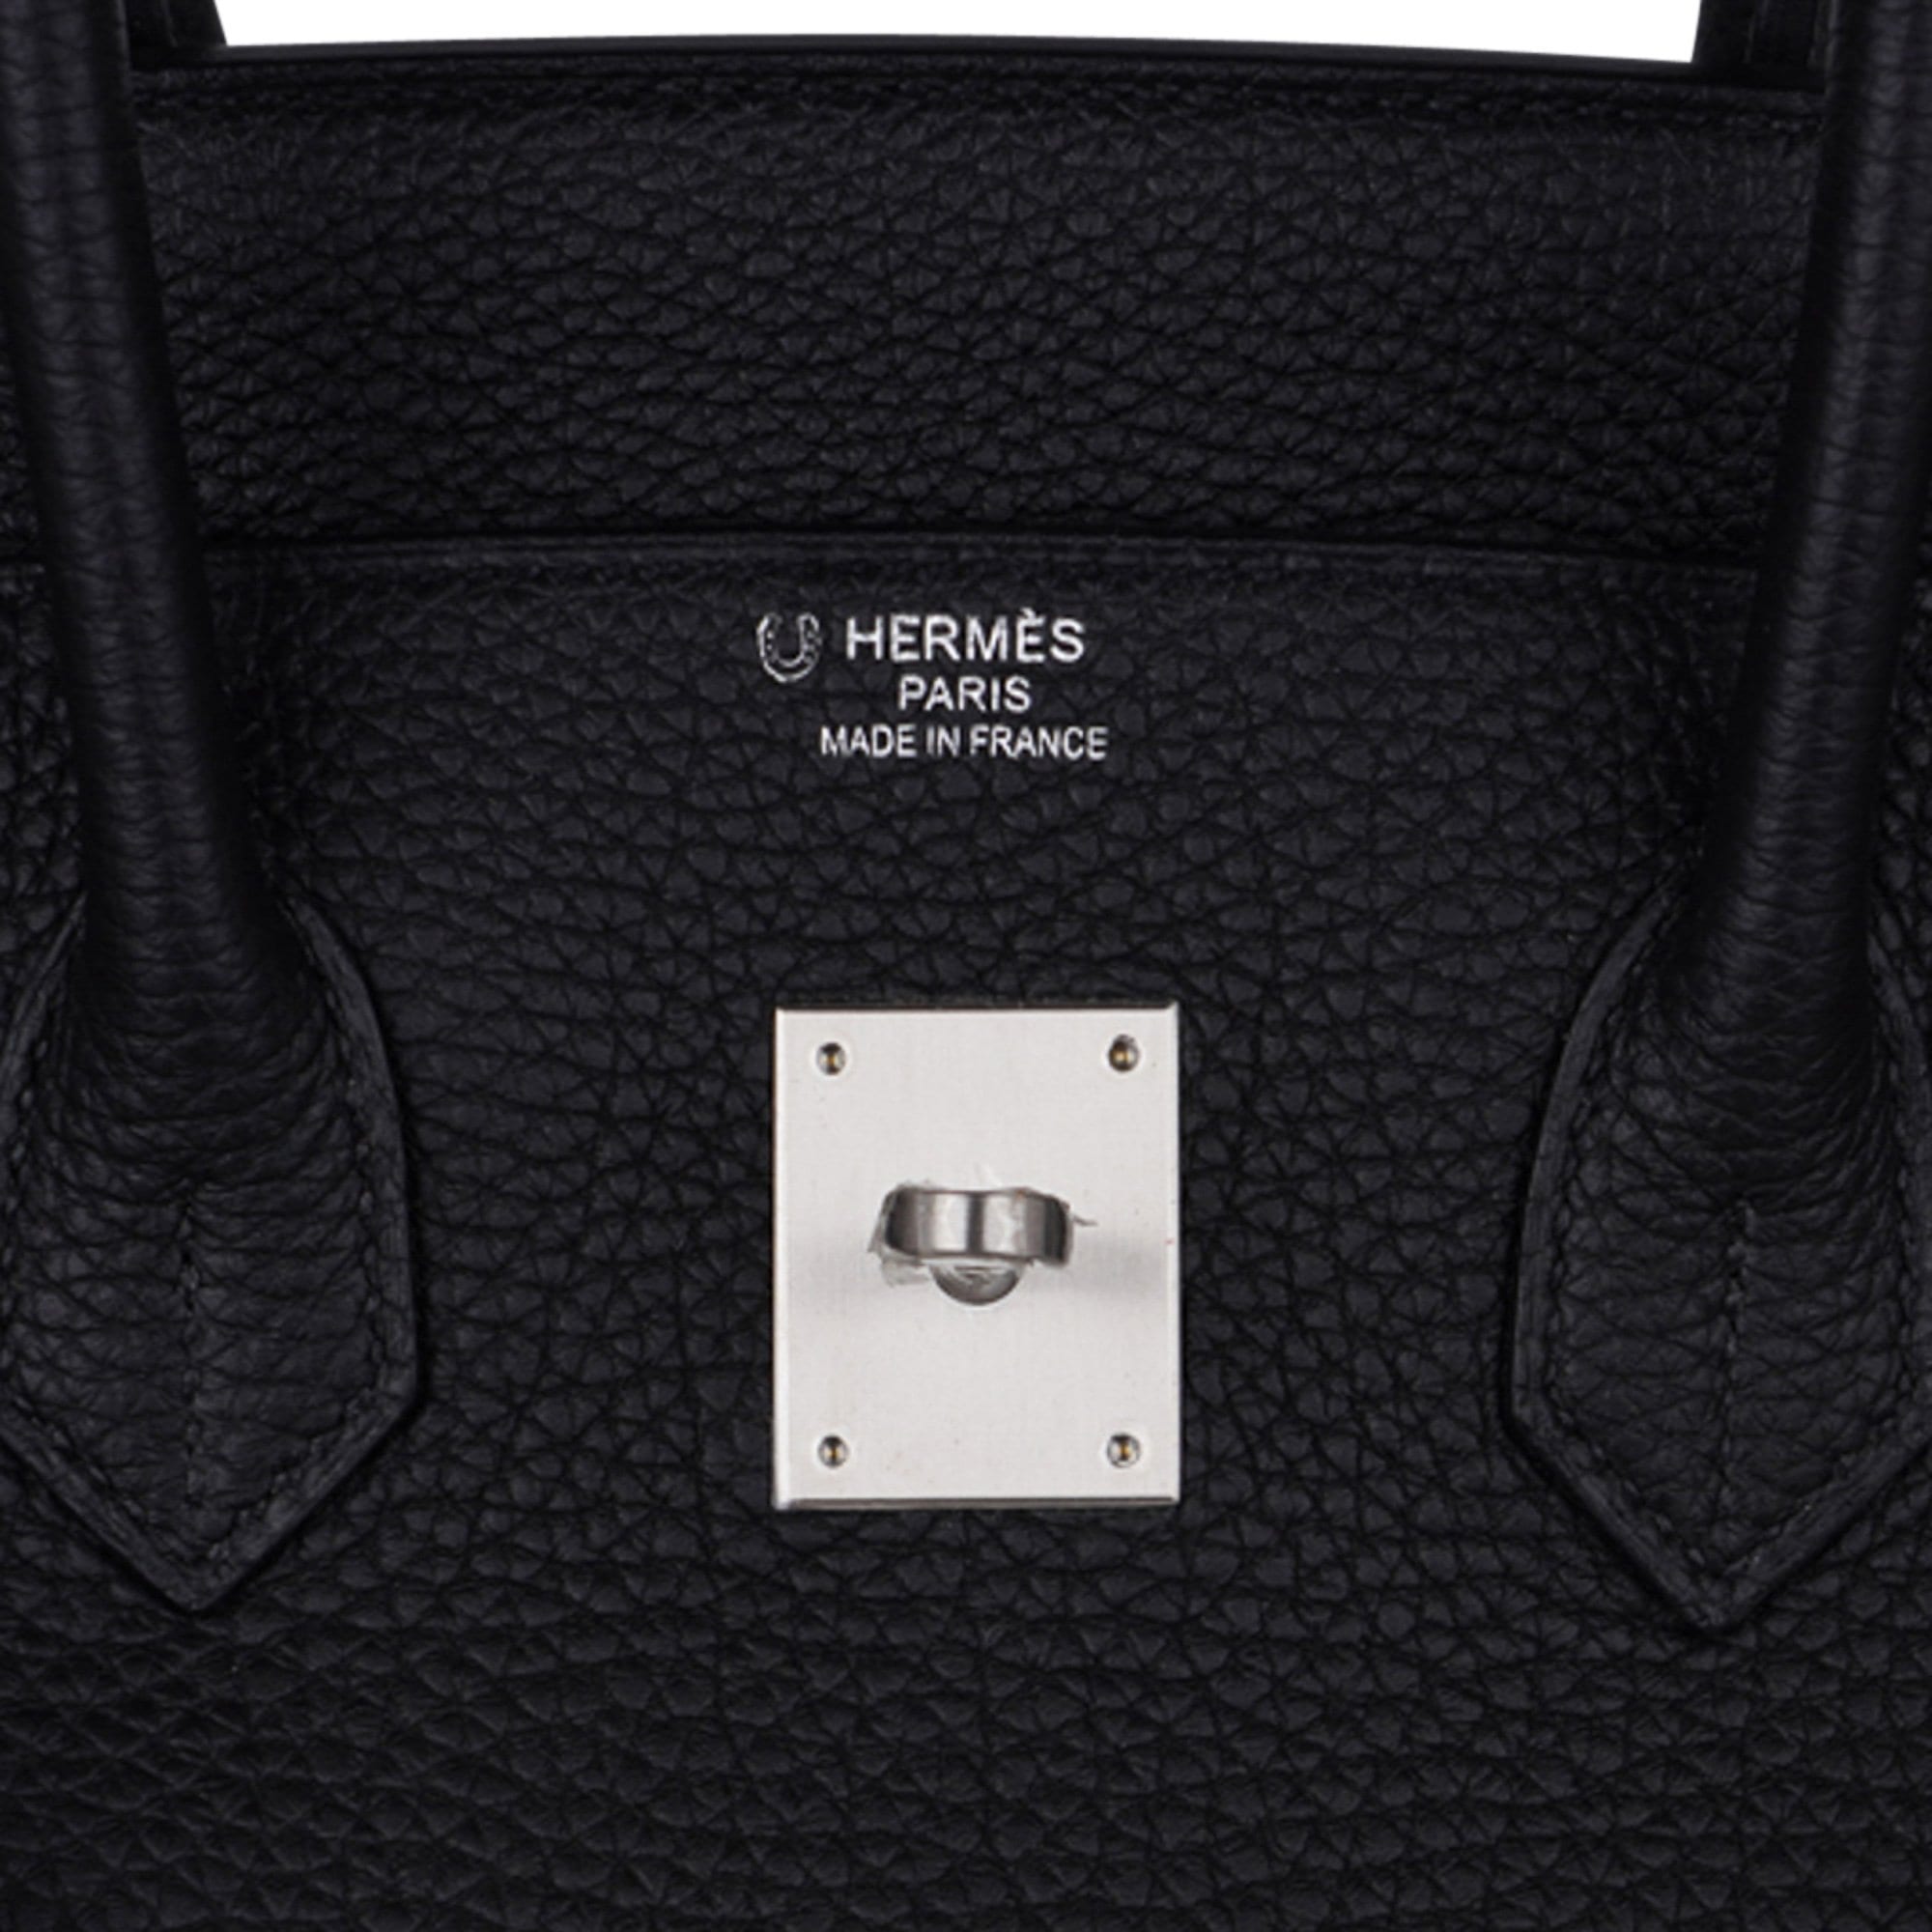 Hermès Birkin 35 Black Togo Gold Hardware - Luxury Shopping